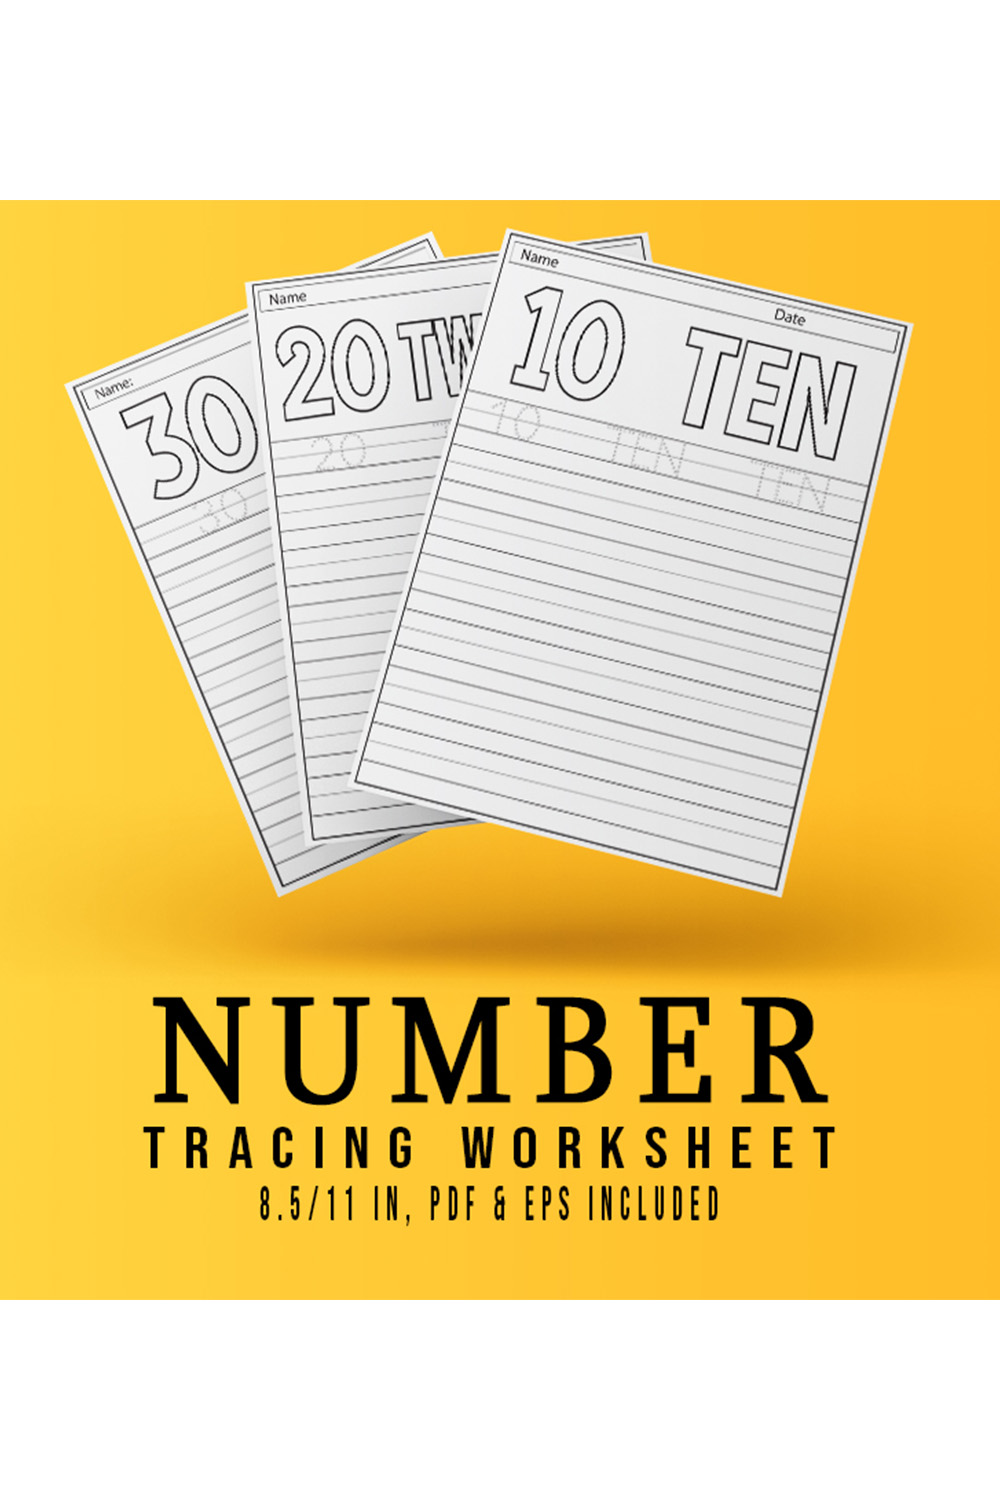 Numbers Tracing Worksheets Design pinterest image.